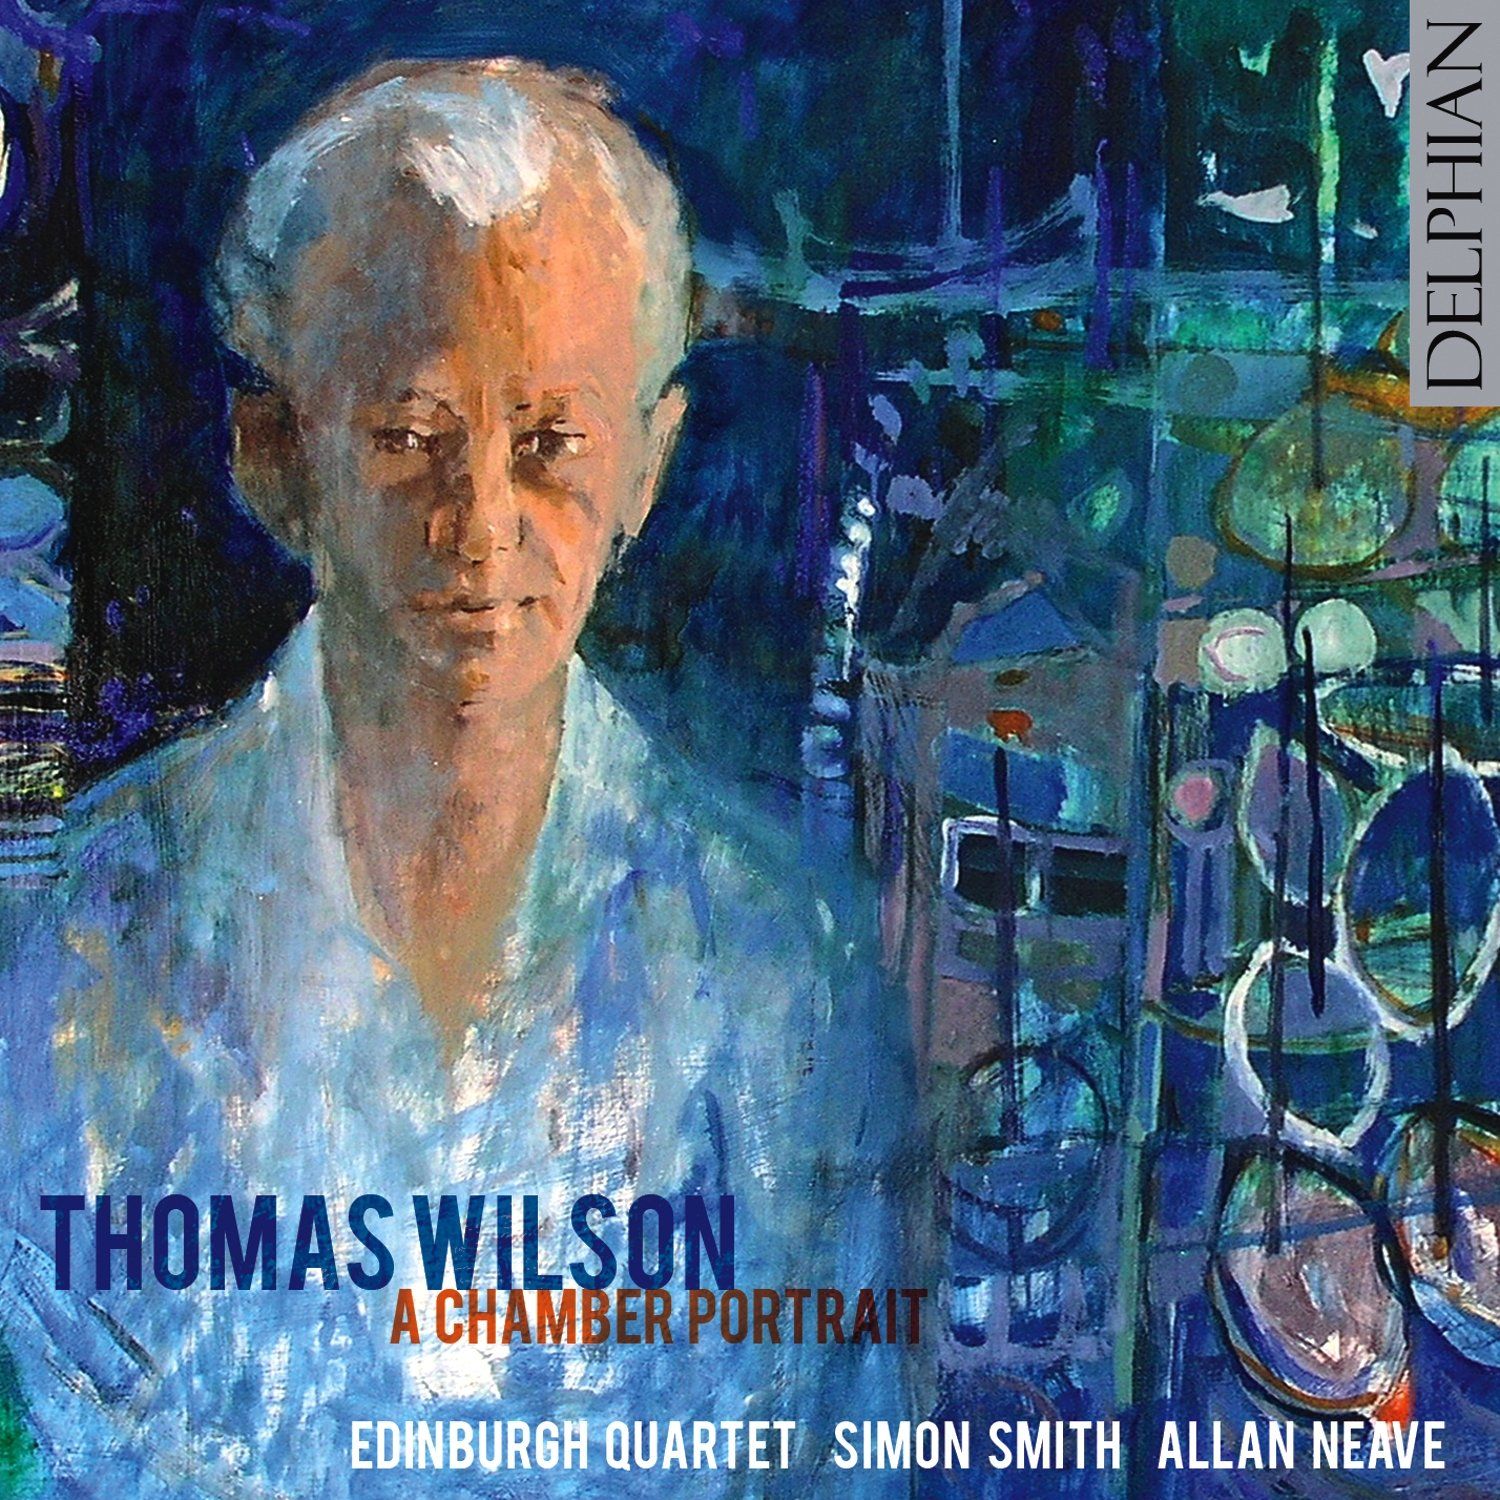 Thomas Wilson: a chamber portrait